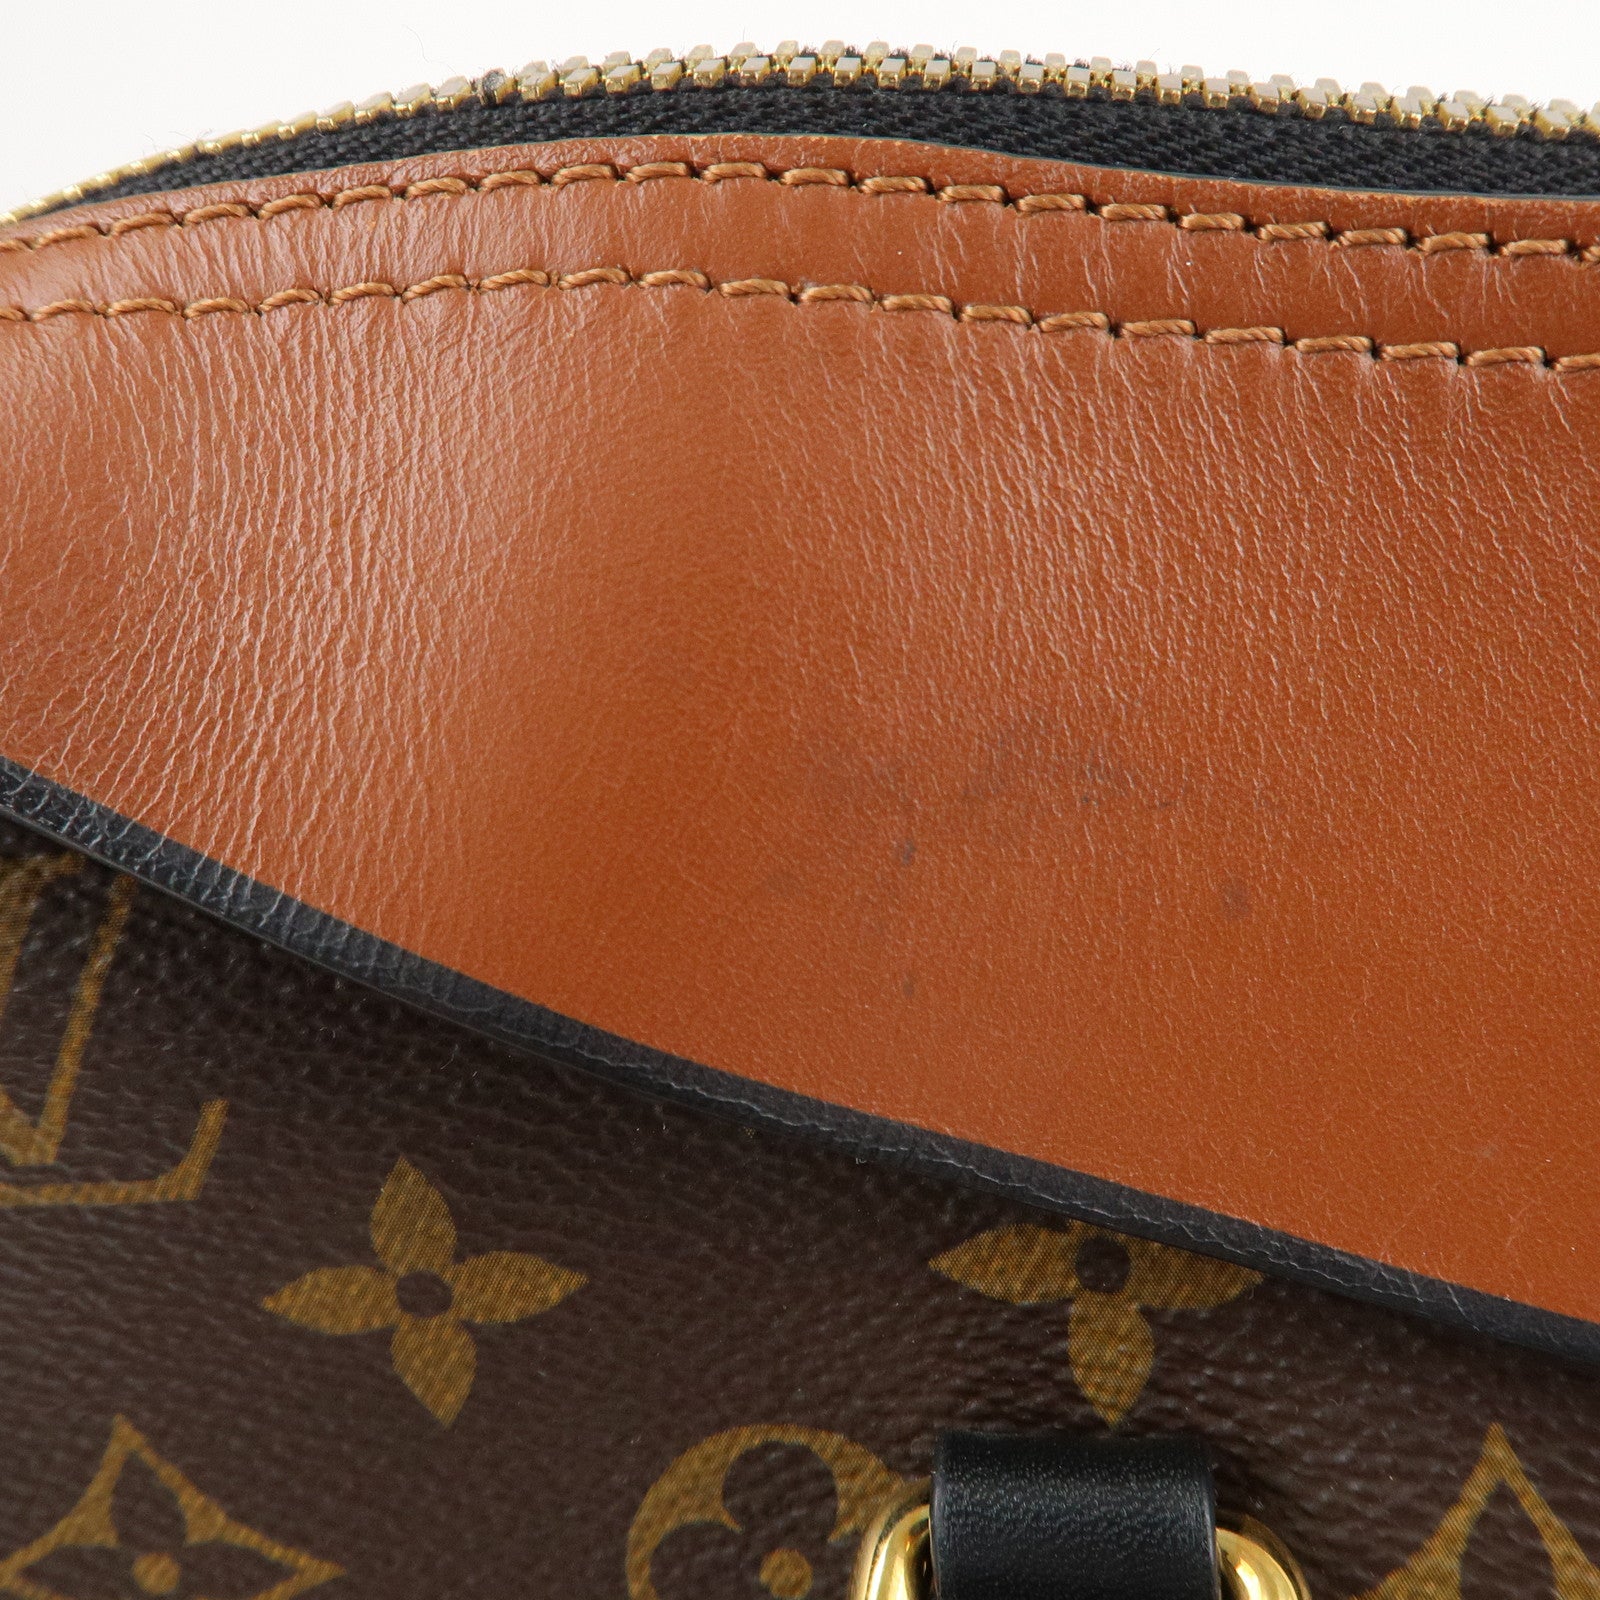 Vuitton - Bag - Monogram - 2 - Tuileries - Tote - Way - Louis Vuitton  Avalon Moyen Modèle handbag in burgundy monogram patent leather -  ep_vintage luxury Store - Louis - M41456 – dct